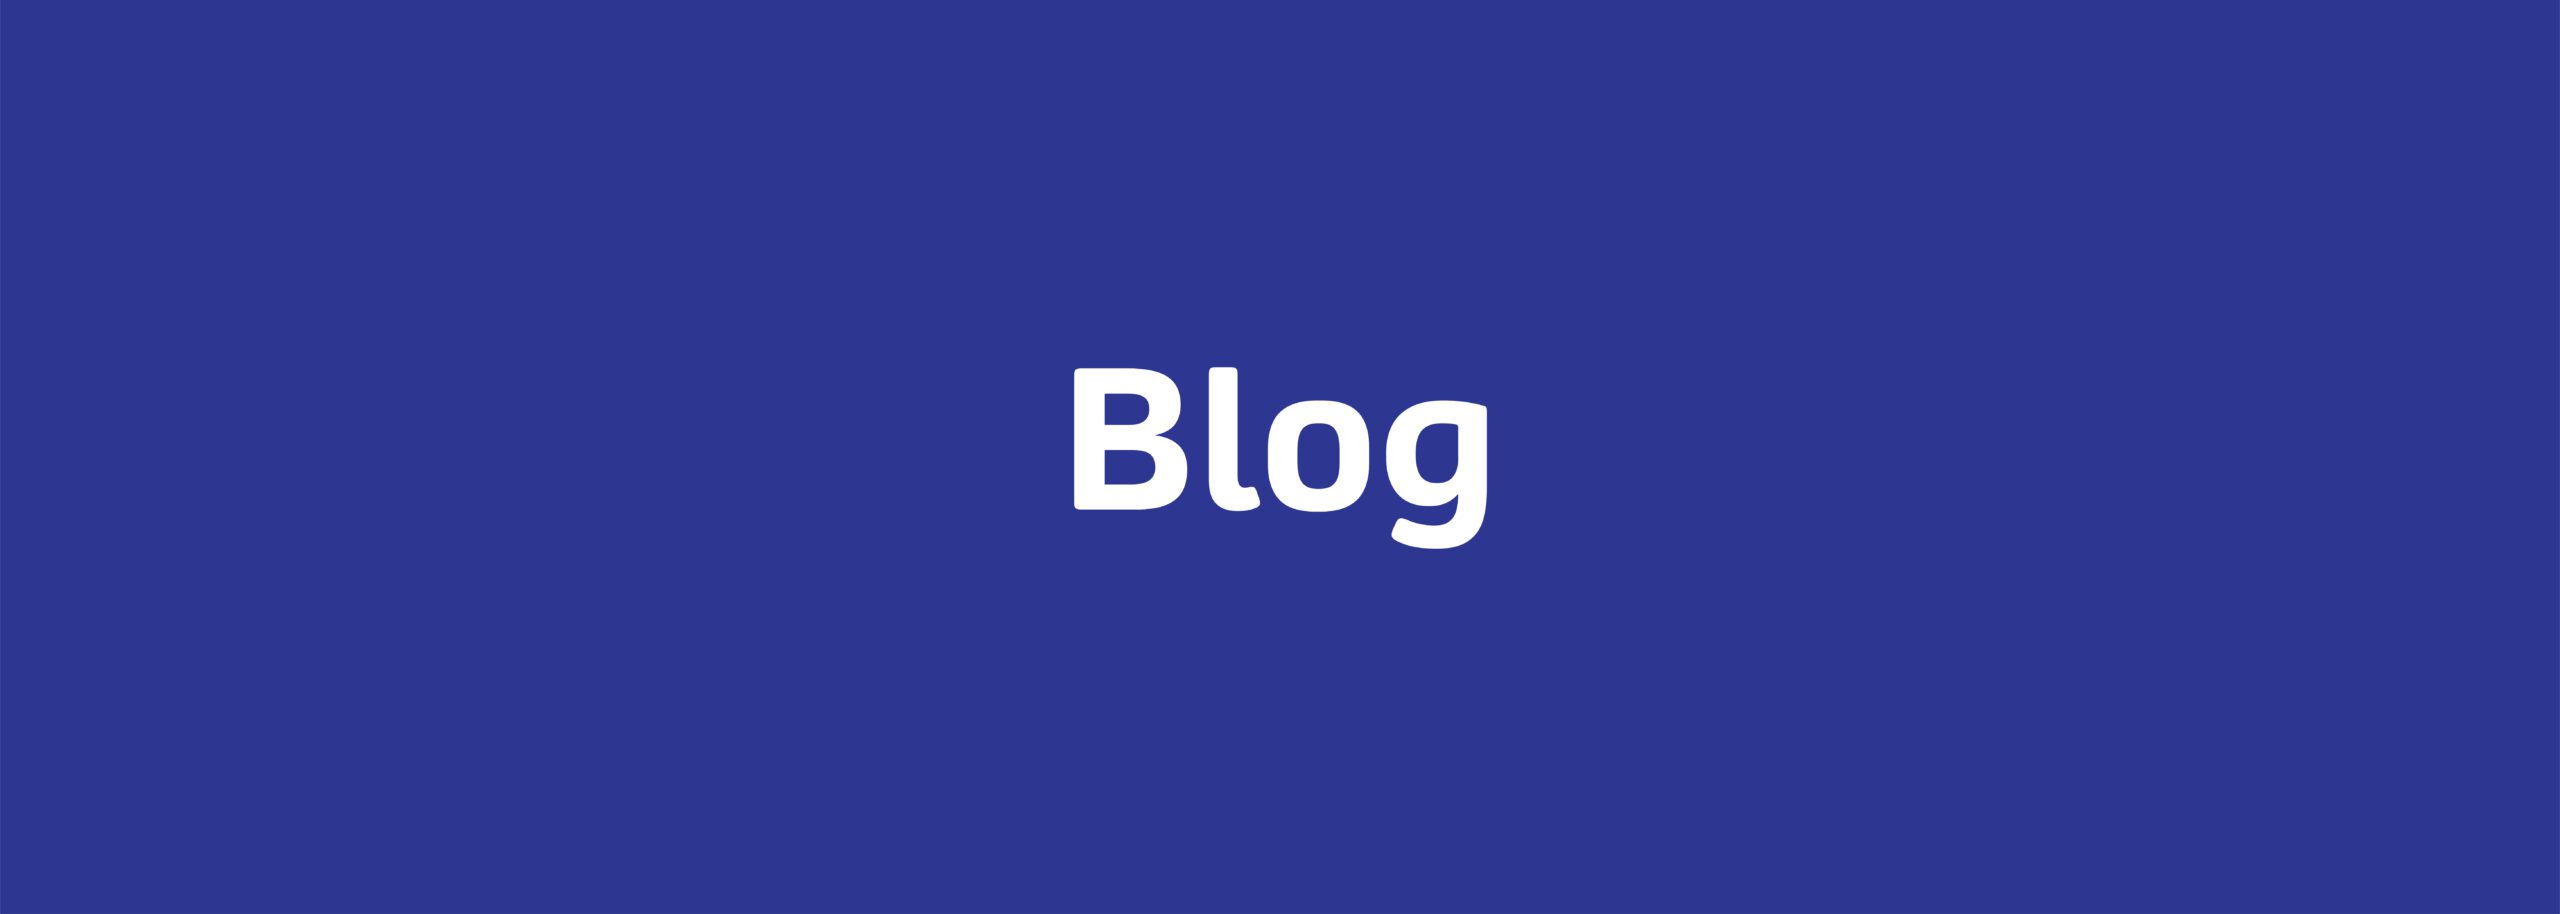 Blog banner - blue